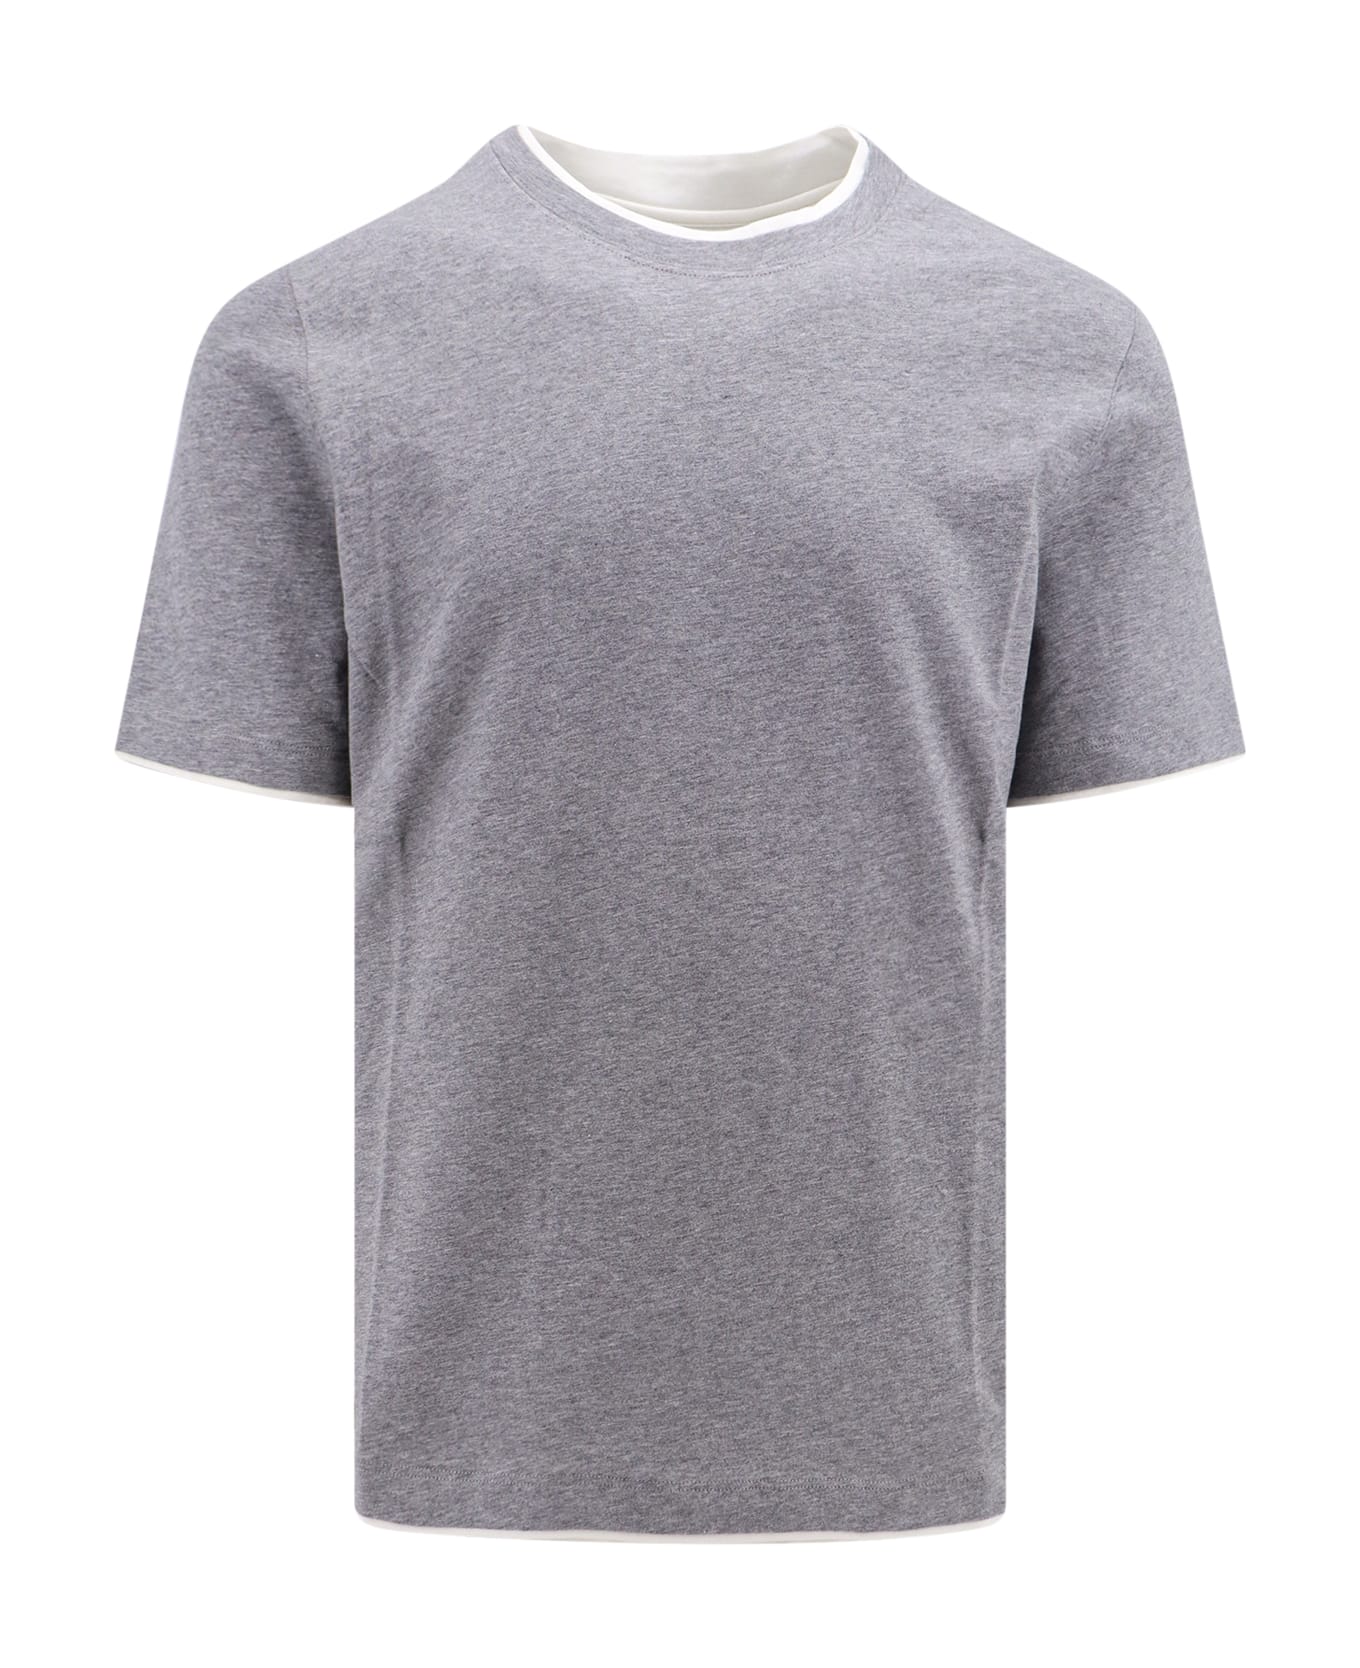 Brunello Cucinelli Contrasting Edges Grey T-shirt - Grey シャツ